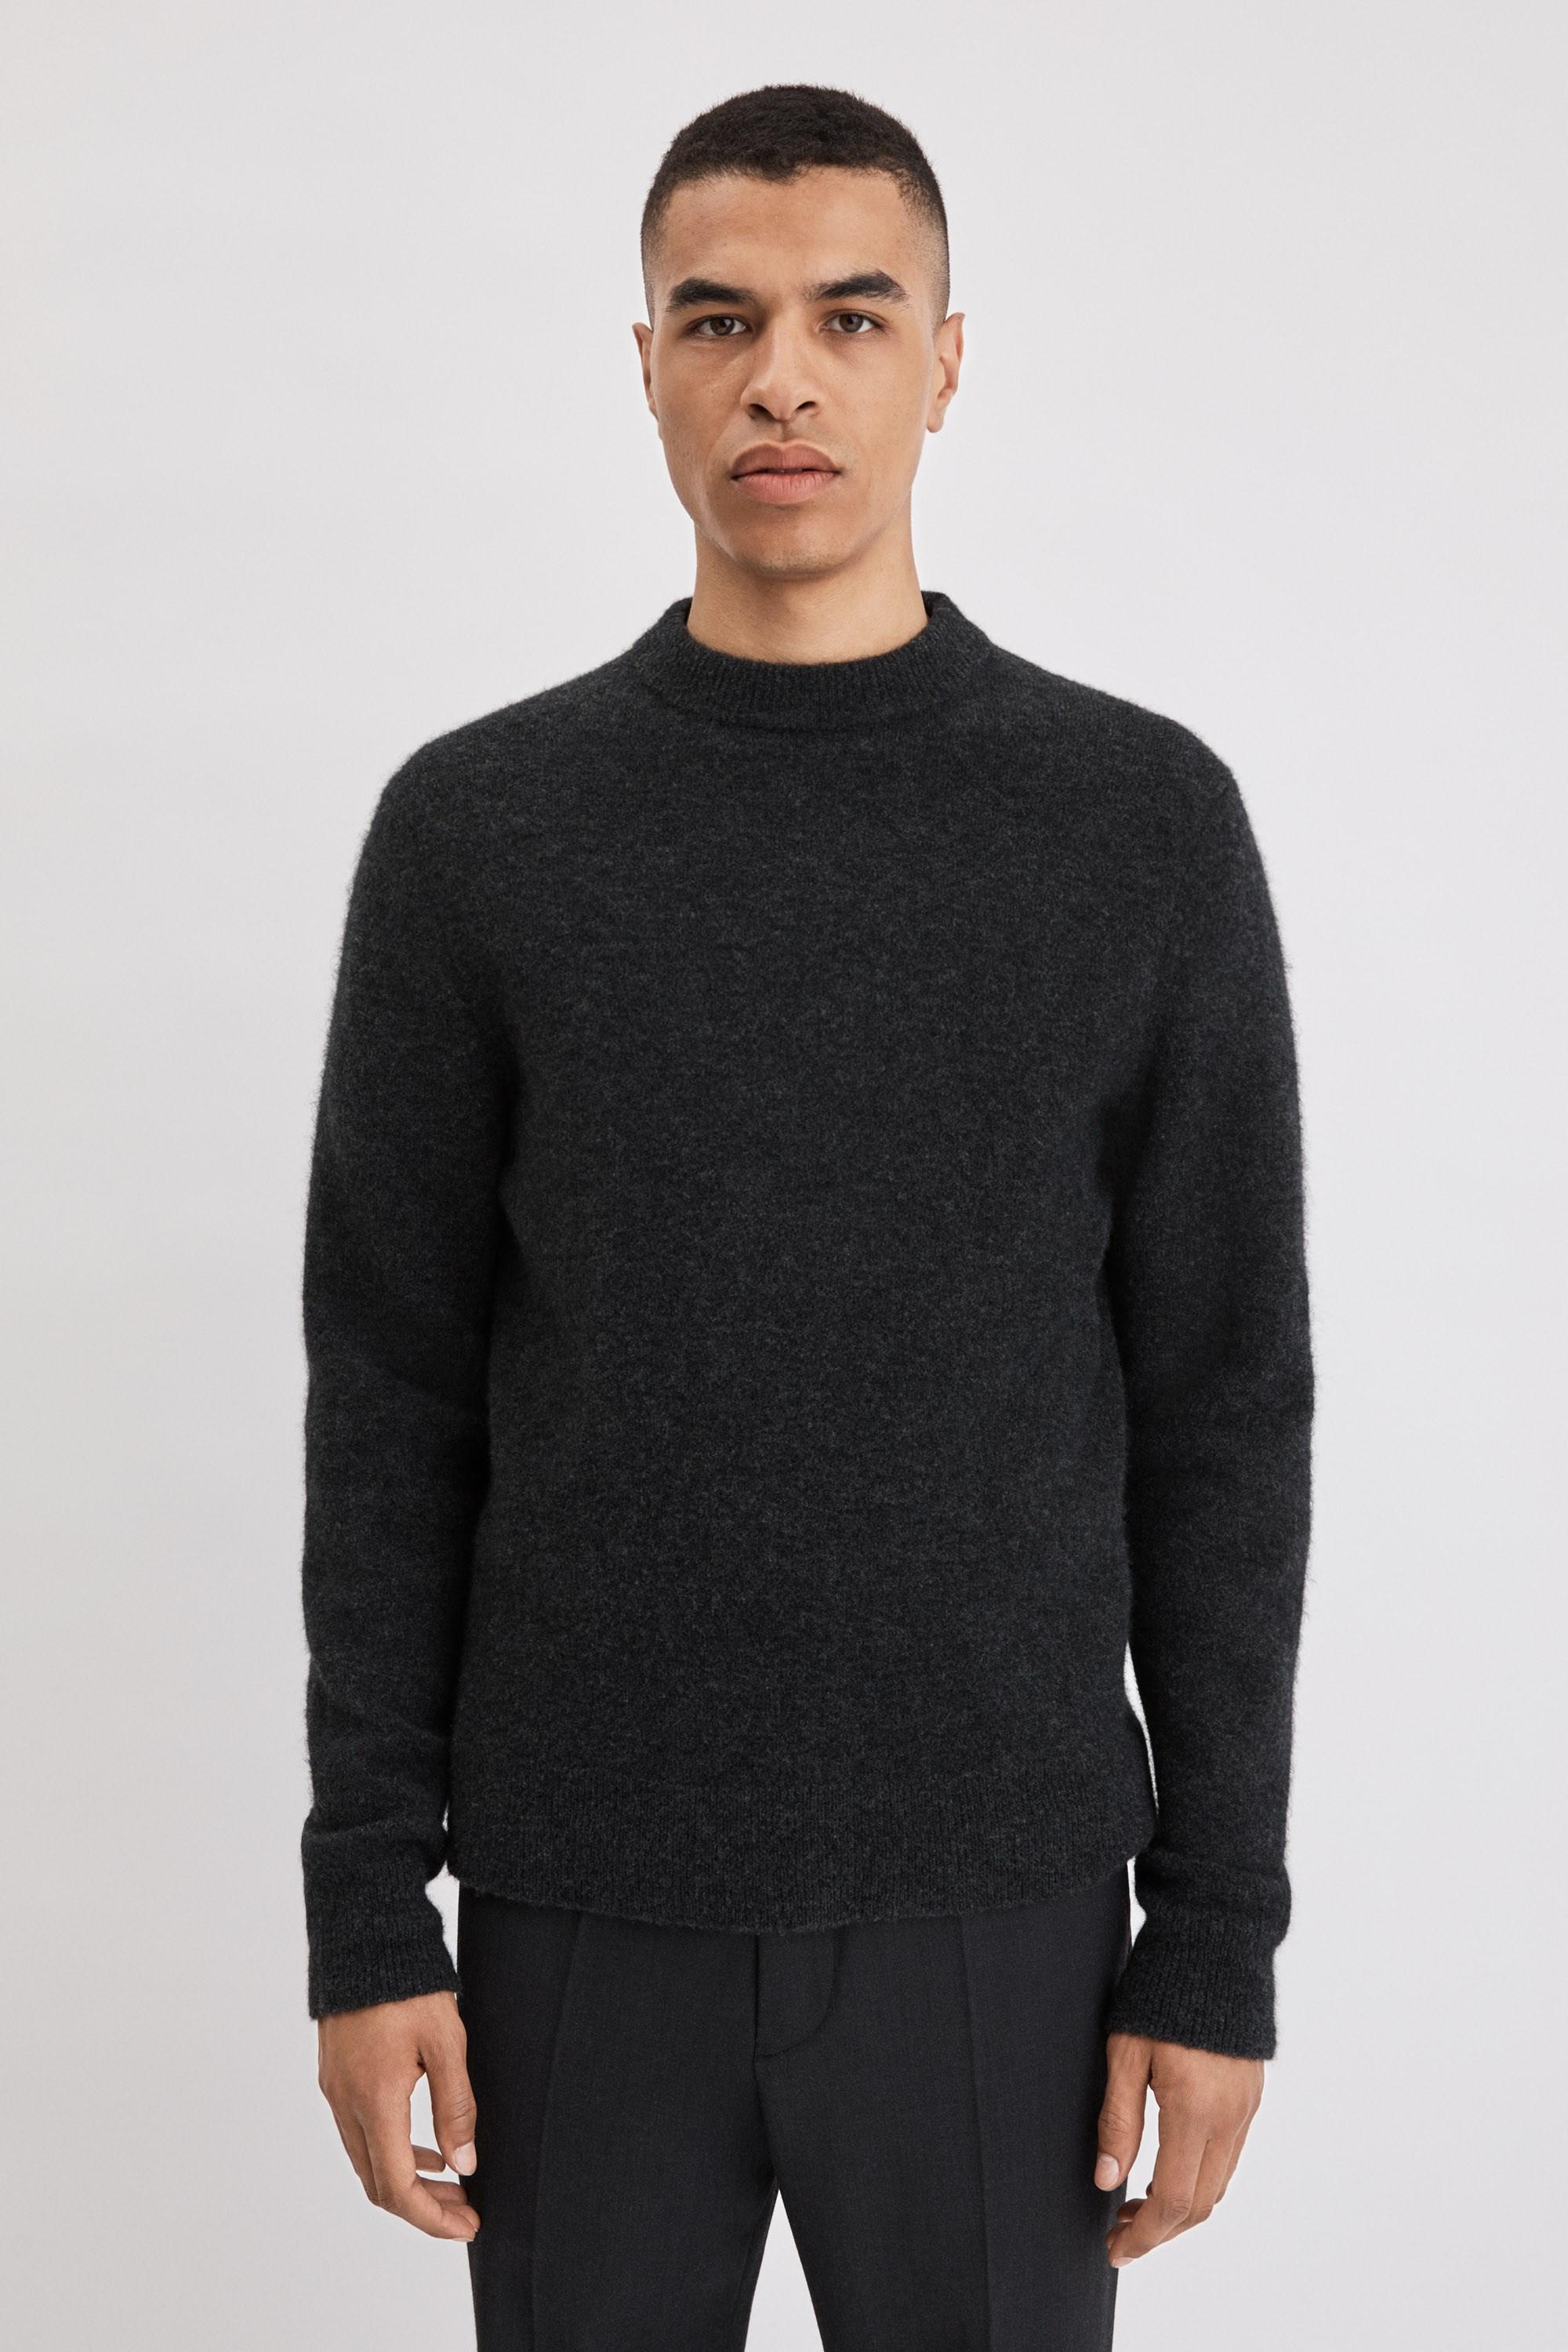 Filippa K Denim Yak Sweater in Charcoal Melange (Gray) for Men - Lyst